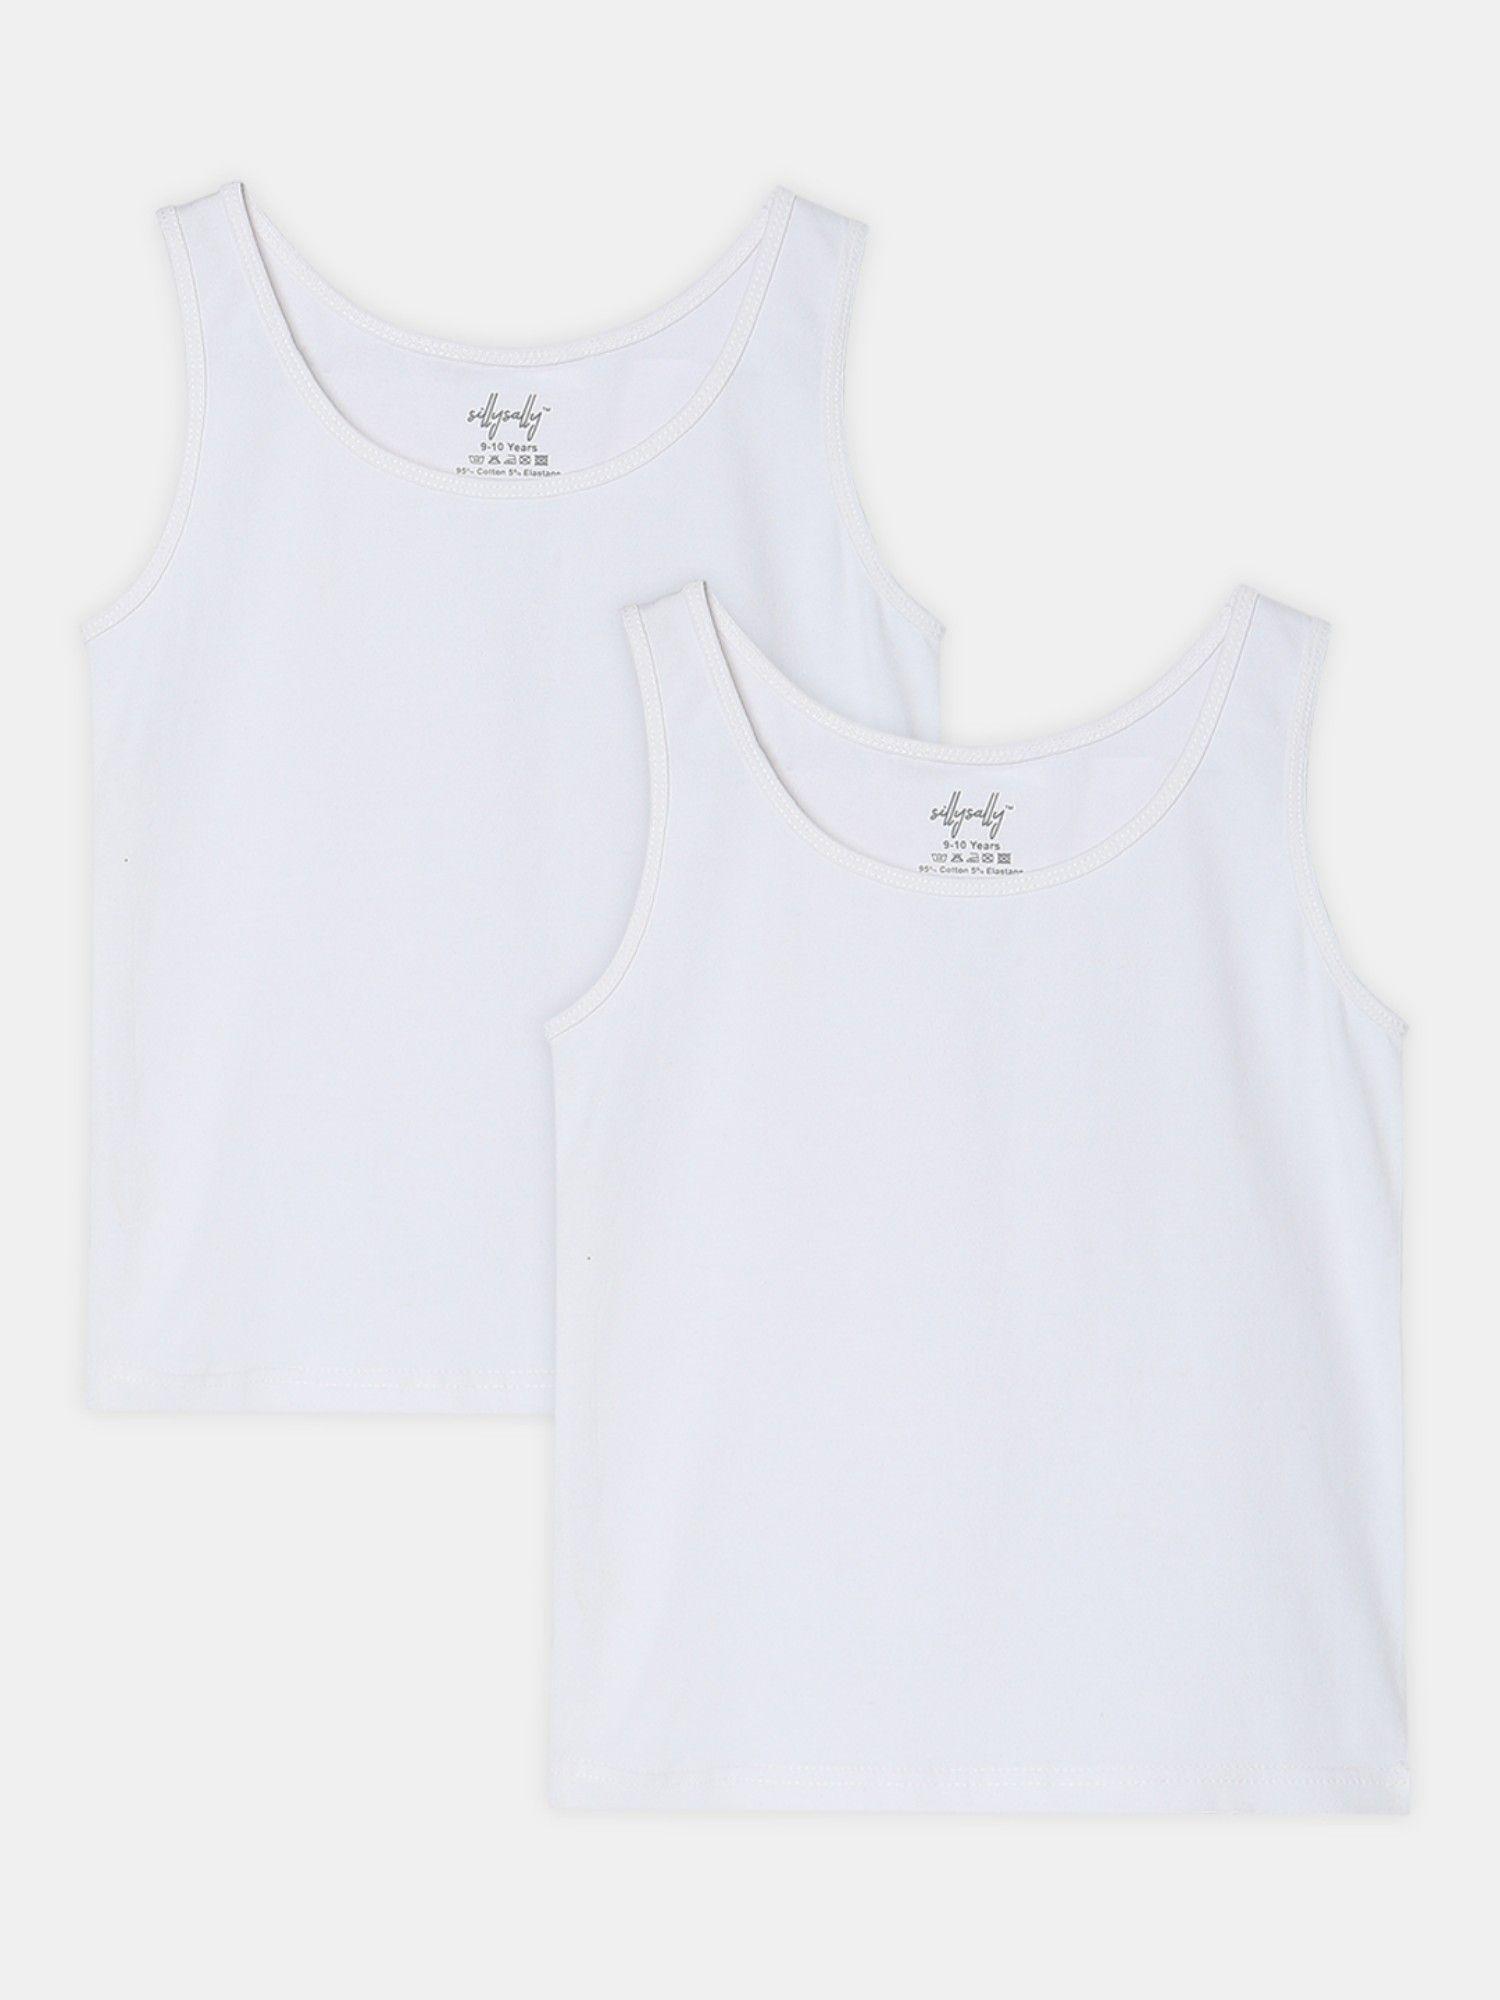 girls-white-vests-(pack-of-2)